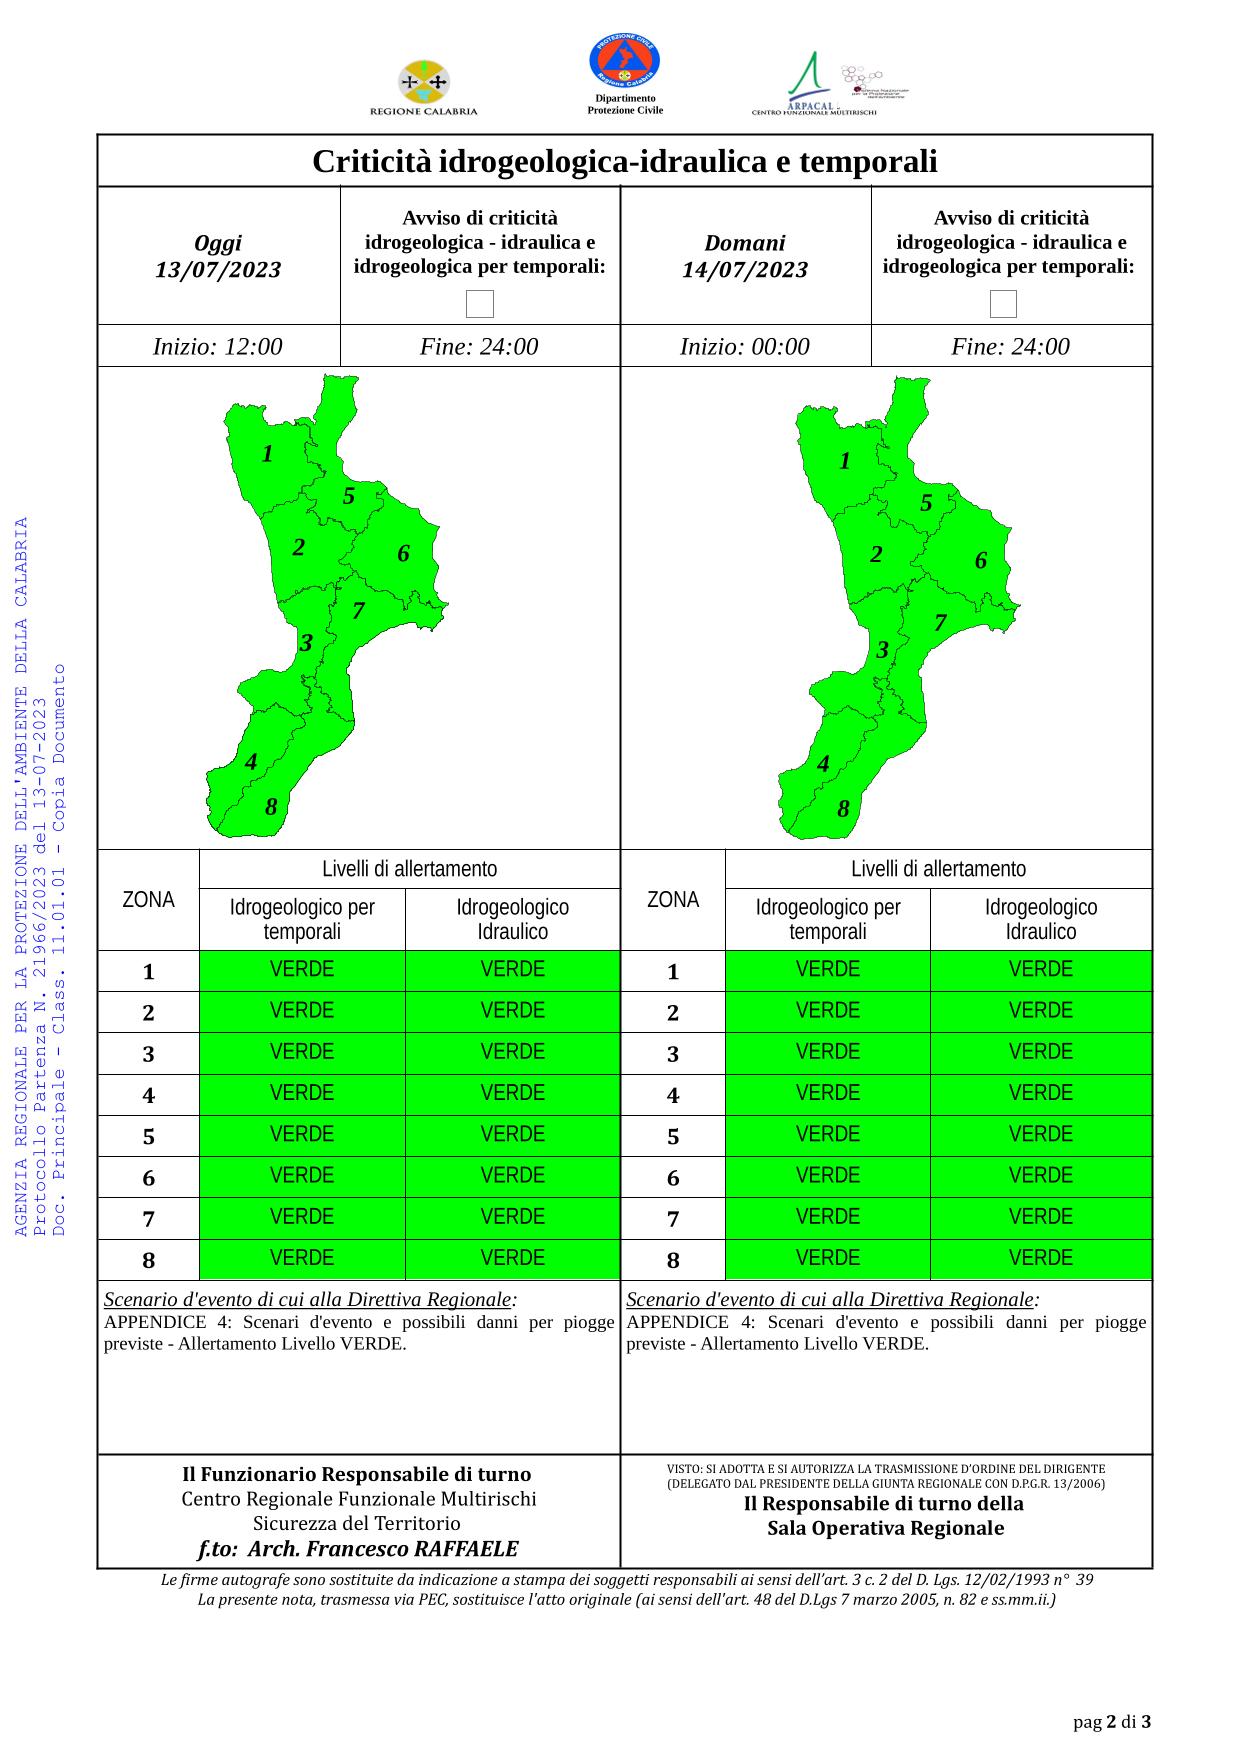 Criticità idrogeologica-idraulica e temporali in Calabria 14-07-2023